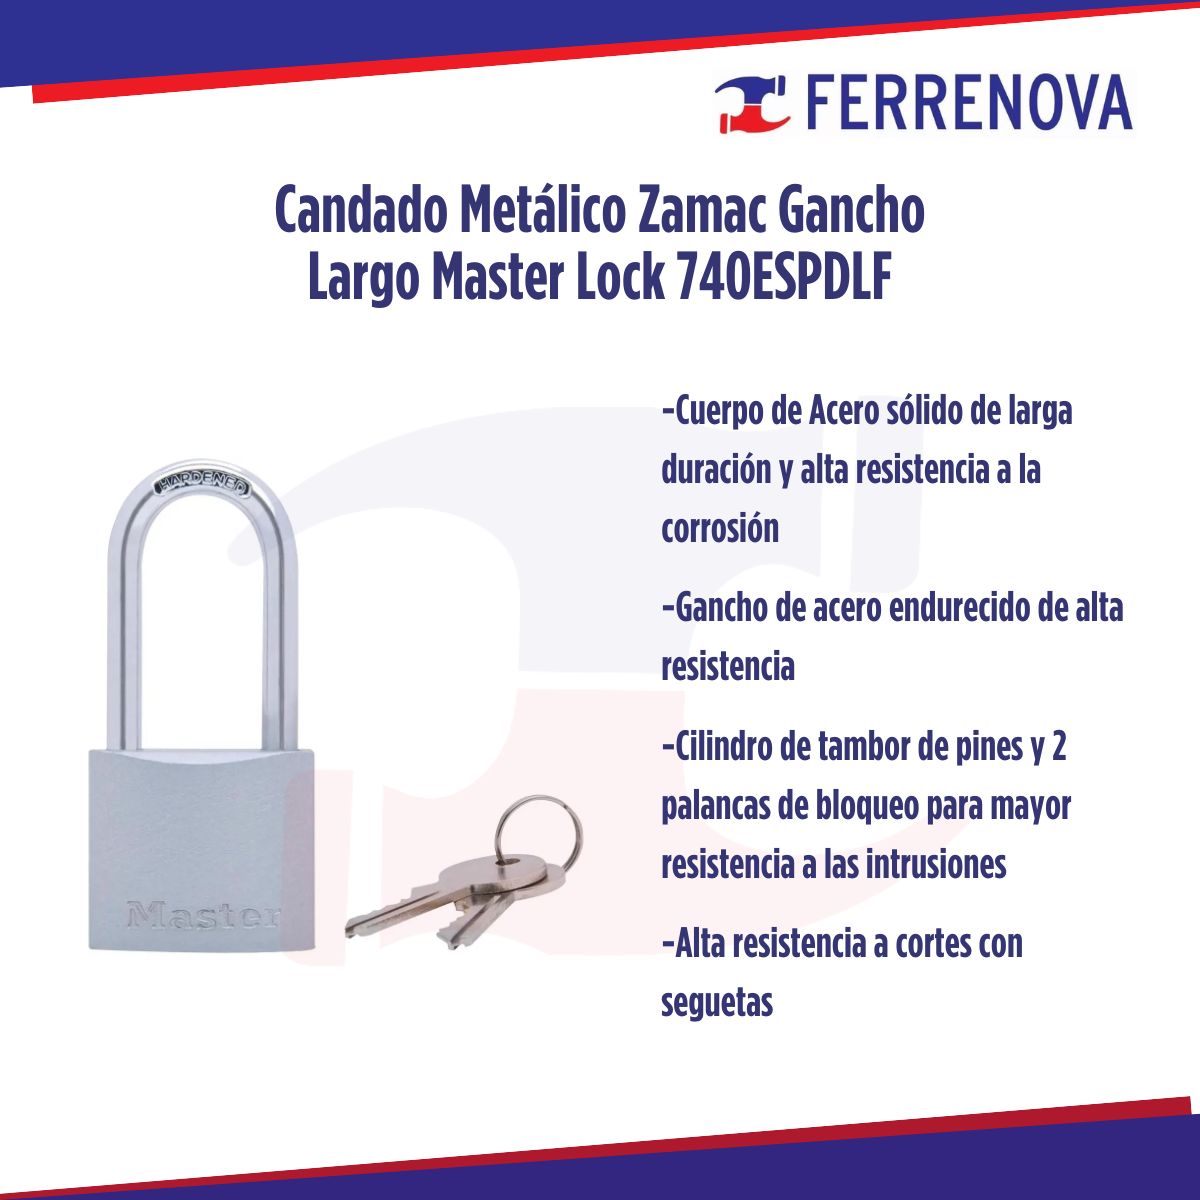 Candado Metálico Zamac Gancho Largo Master Lock 740ESPDLF